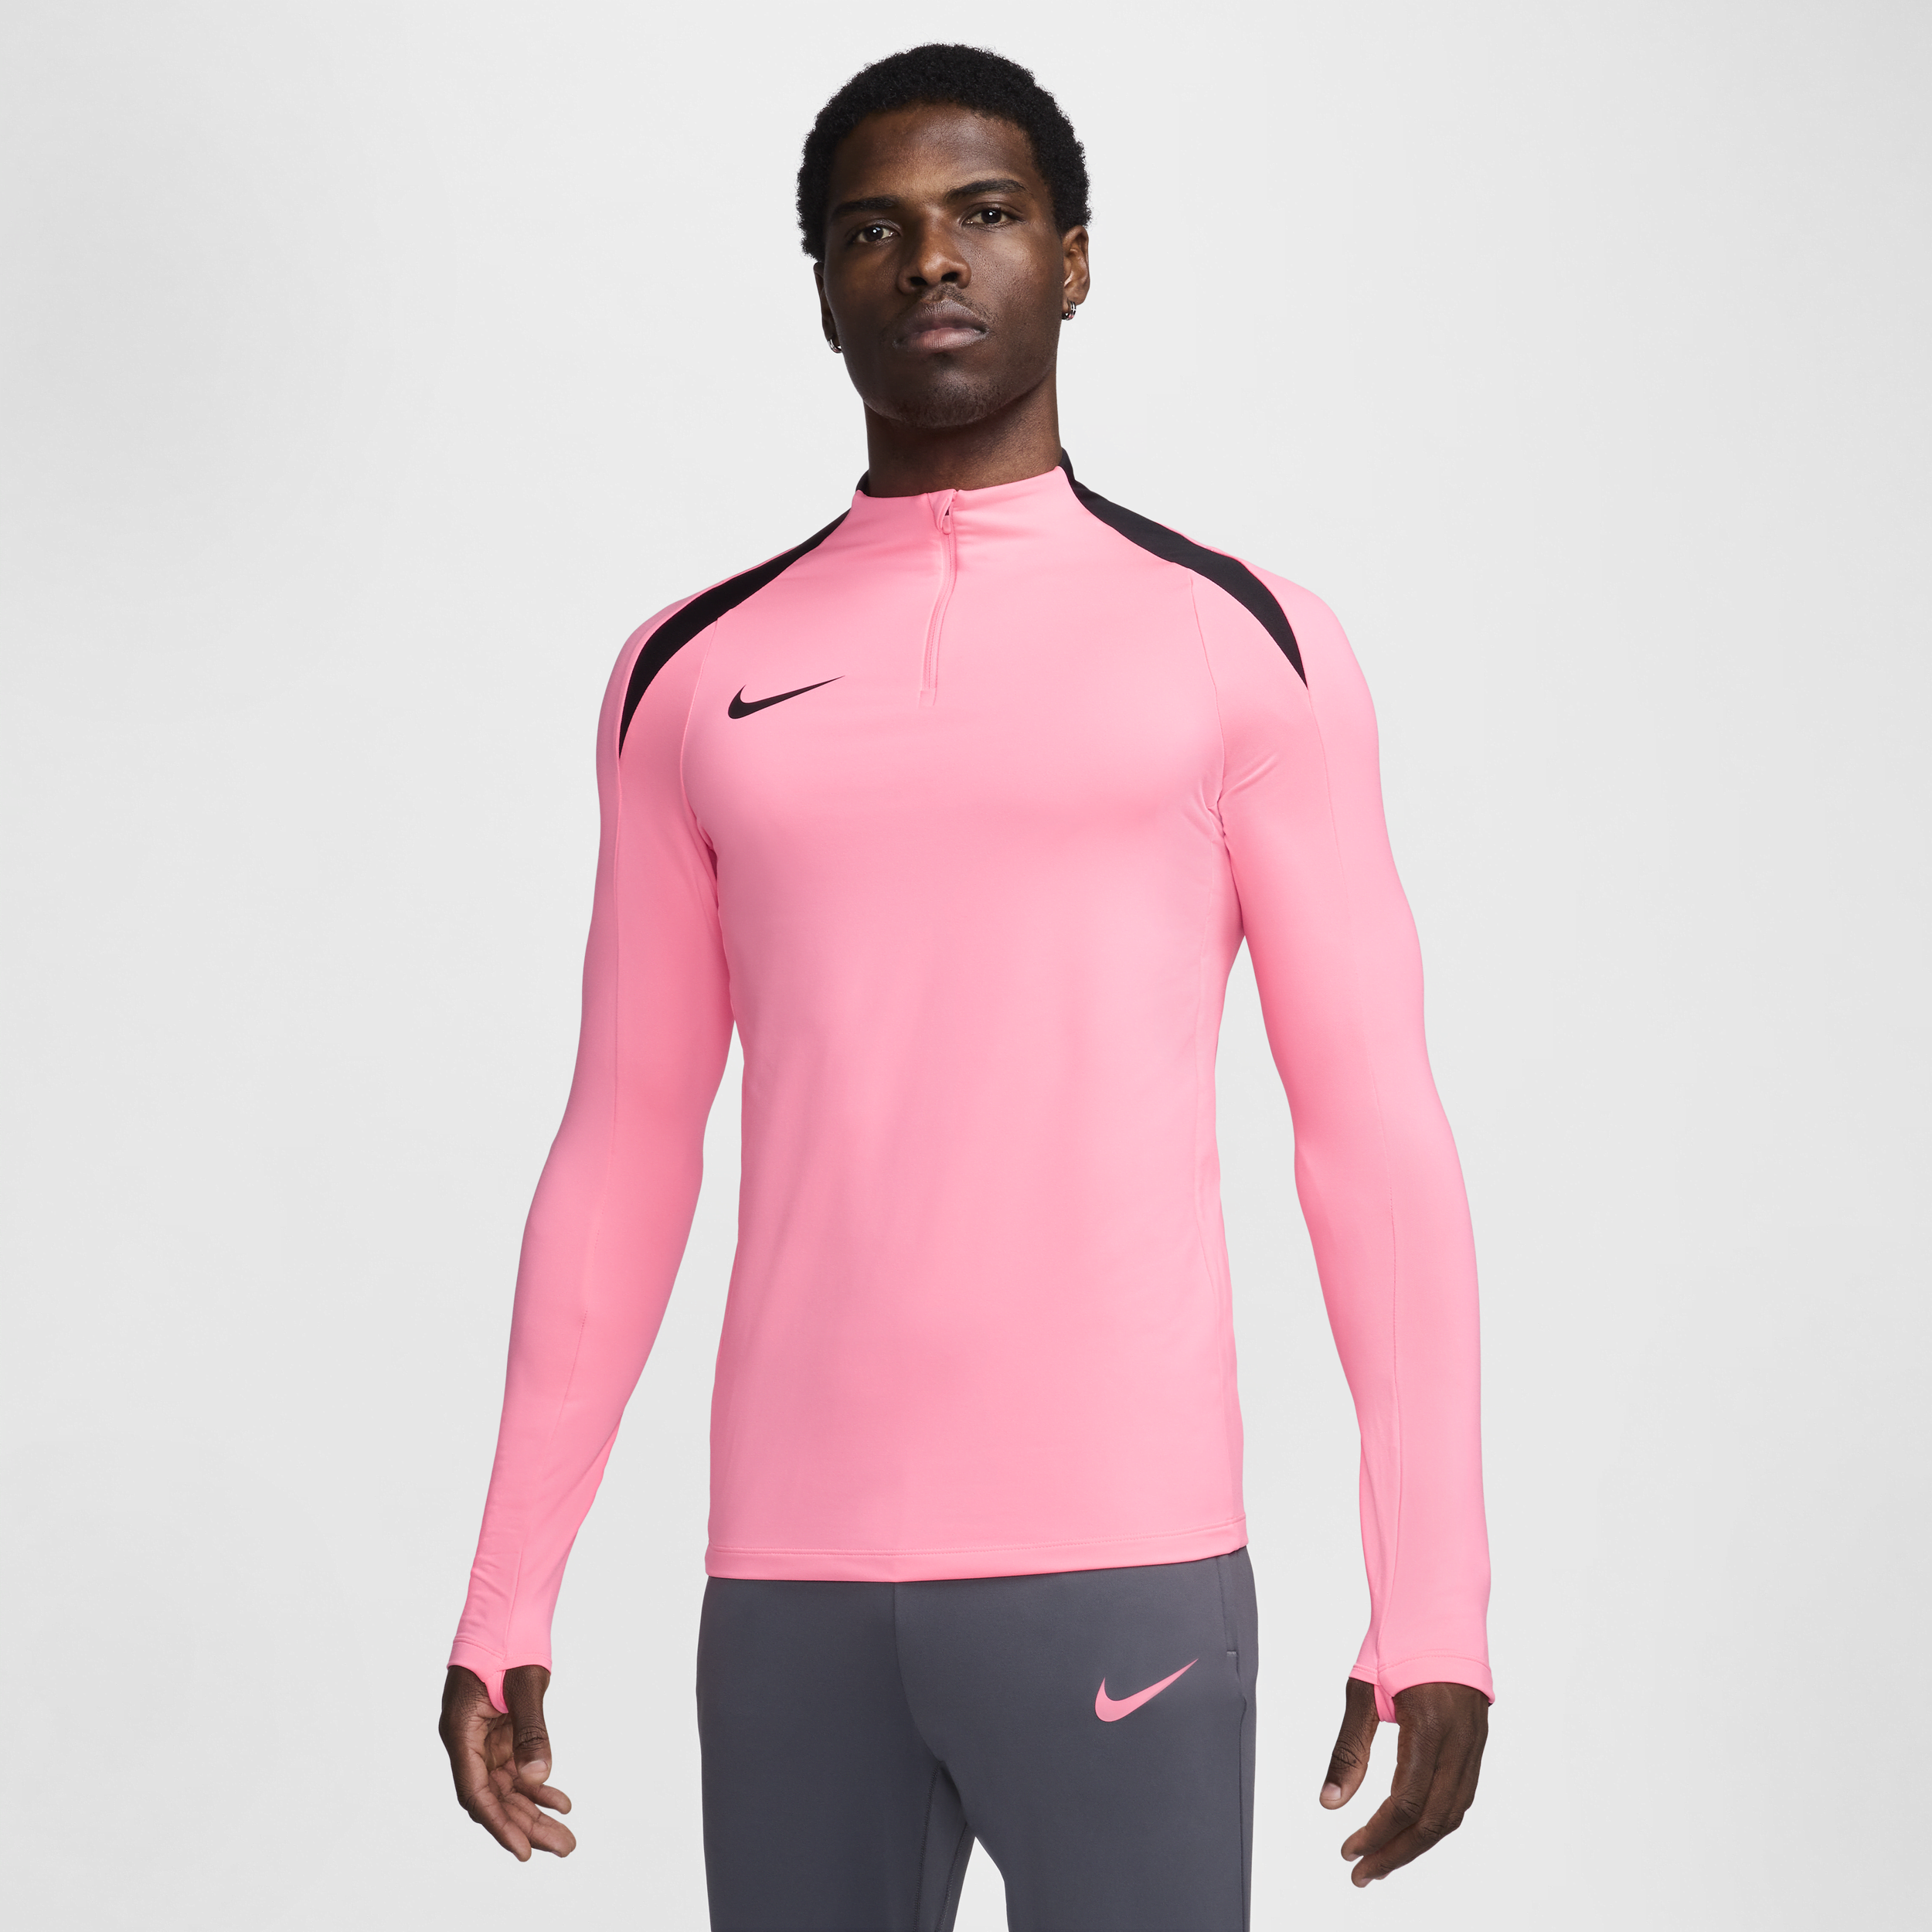 Nike Strike Dri-FIT voetbaltrainingstop met halflange rits voor heren - Roze